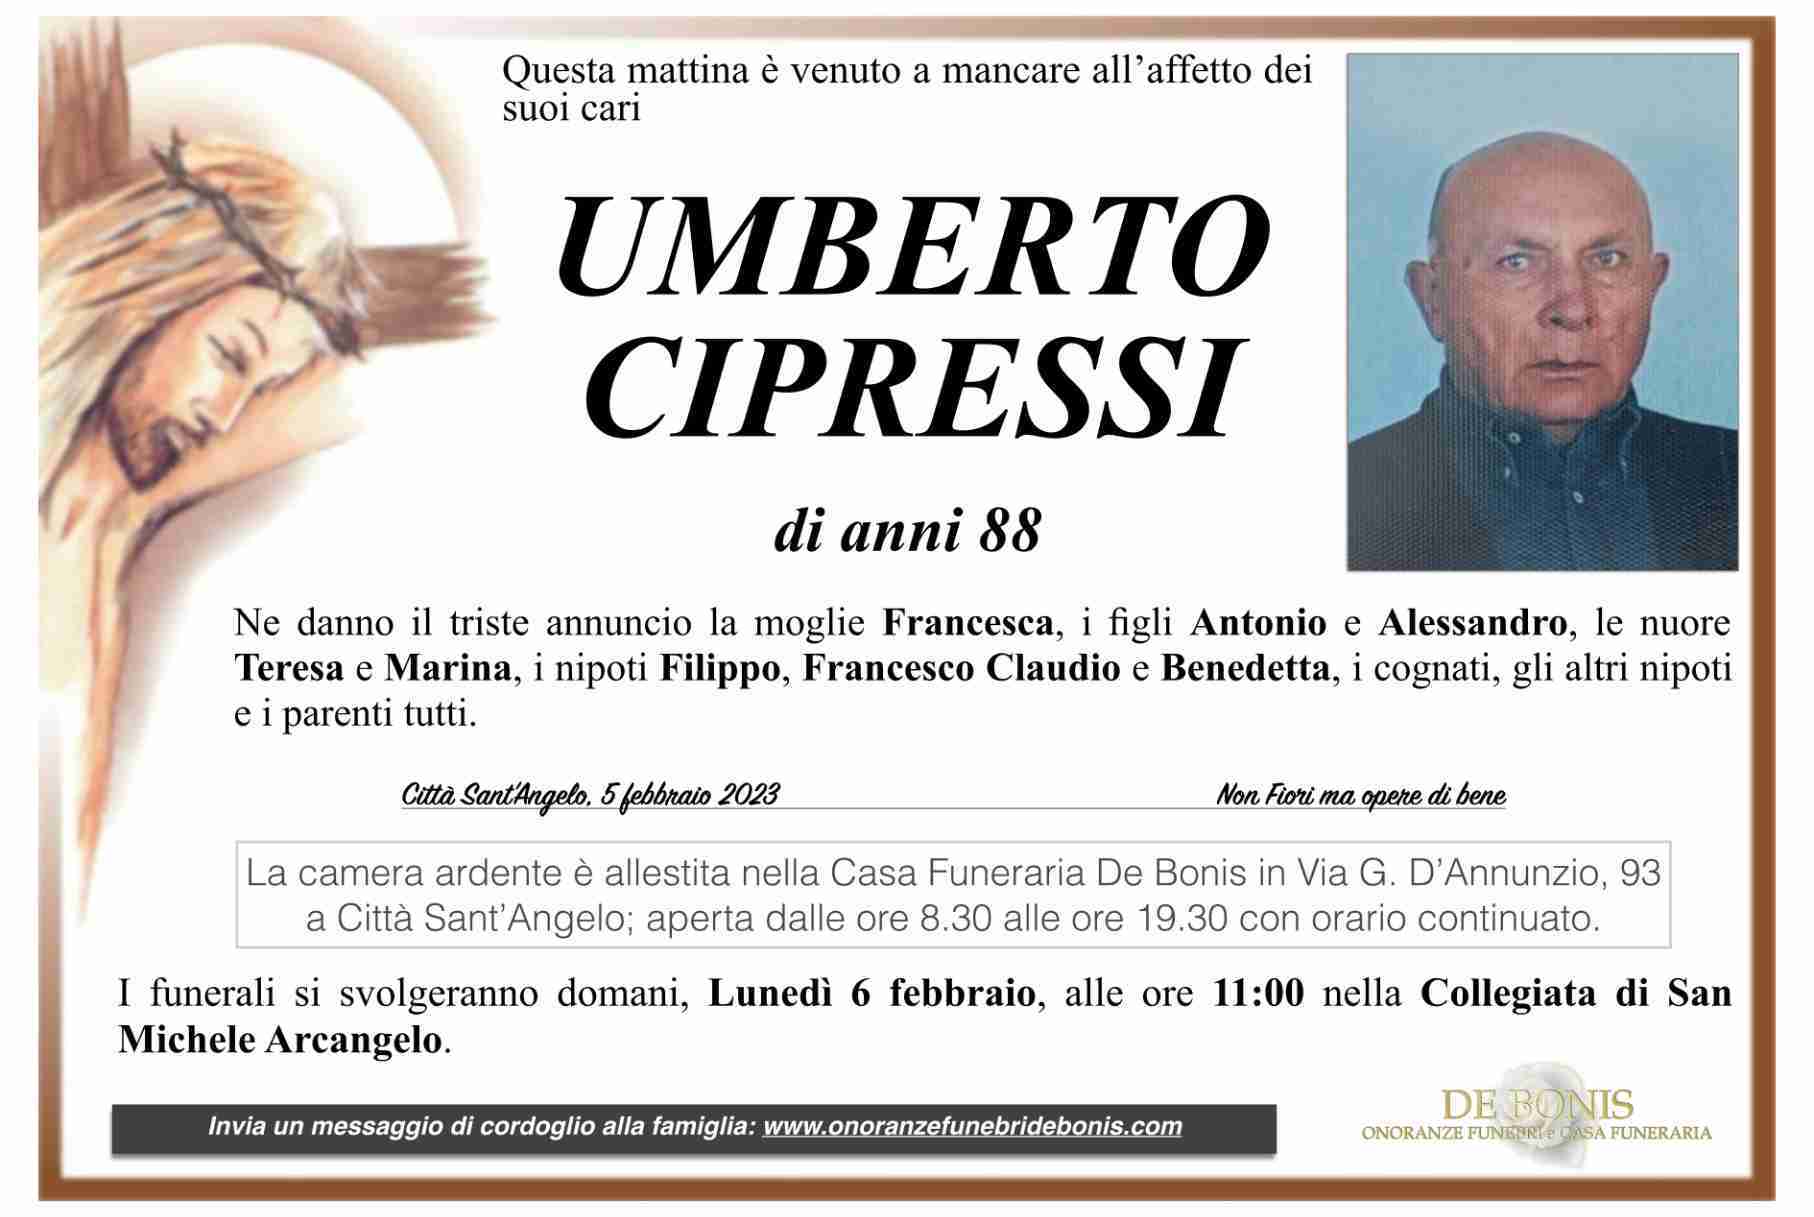 Umberto Cipressi